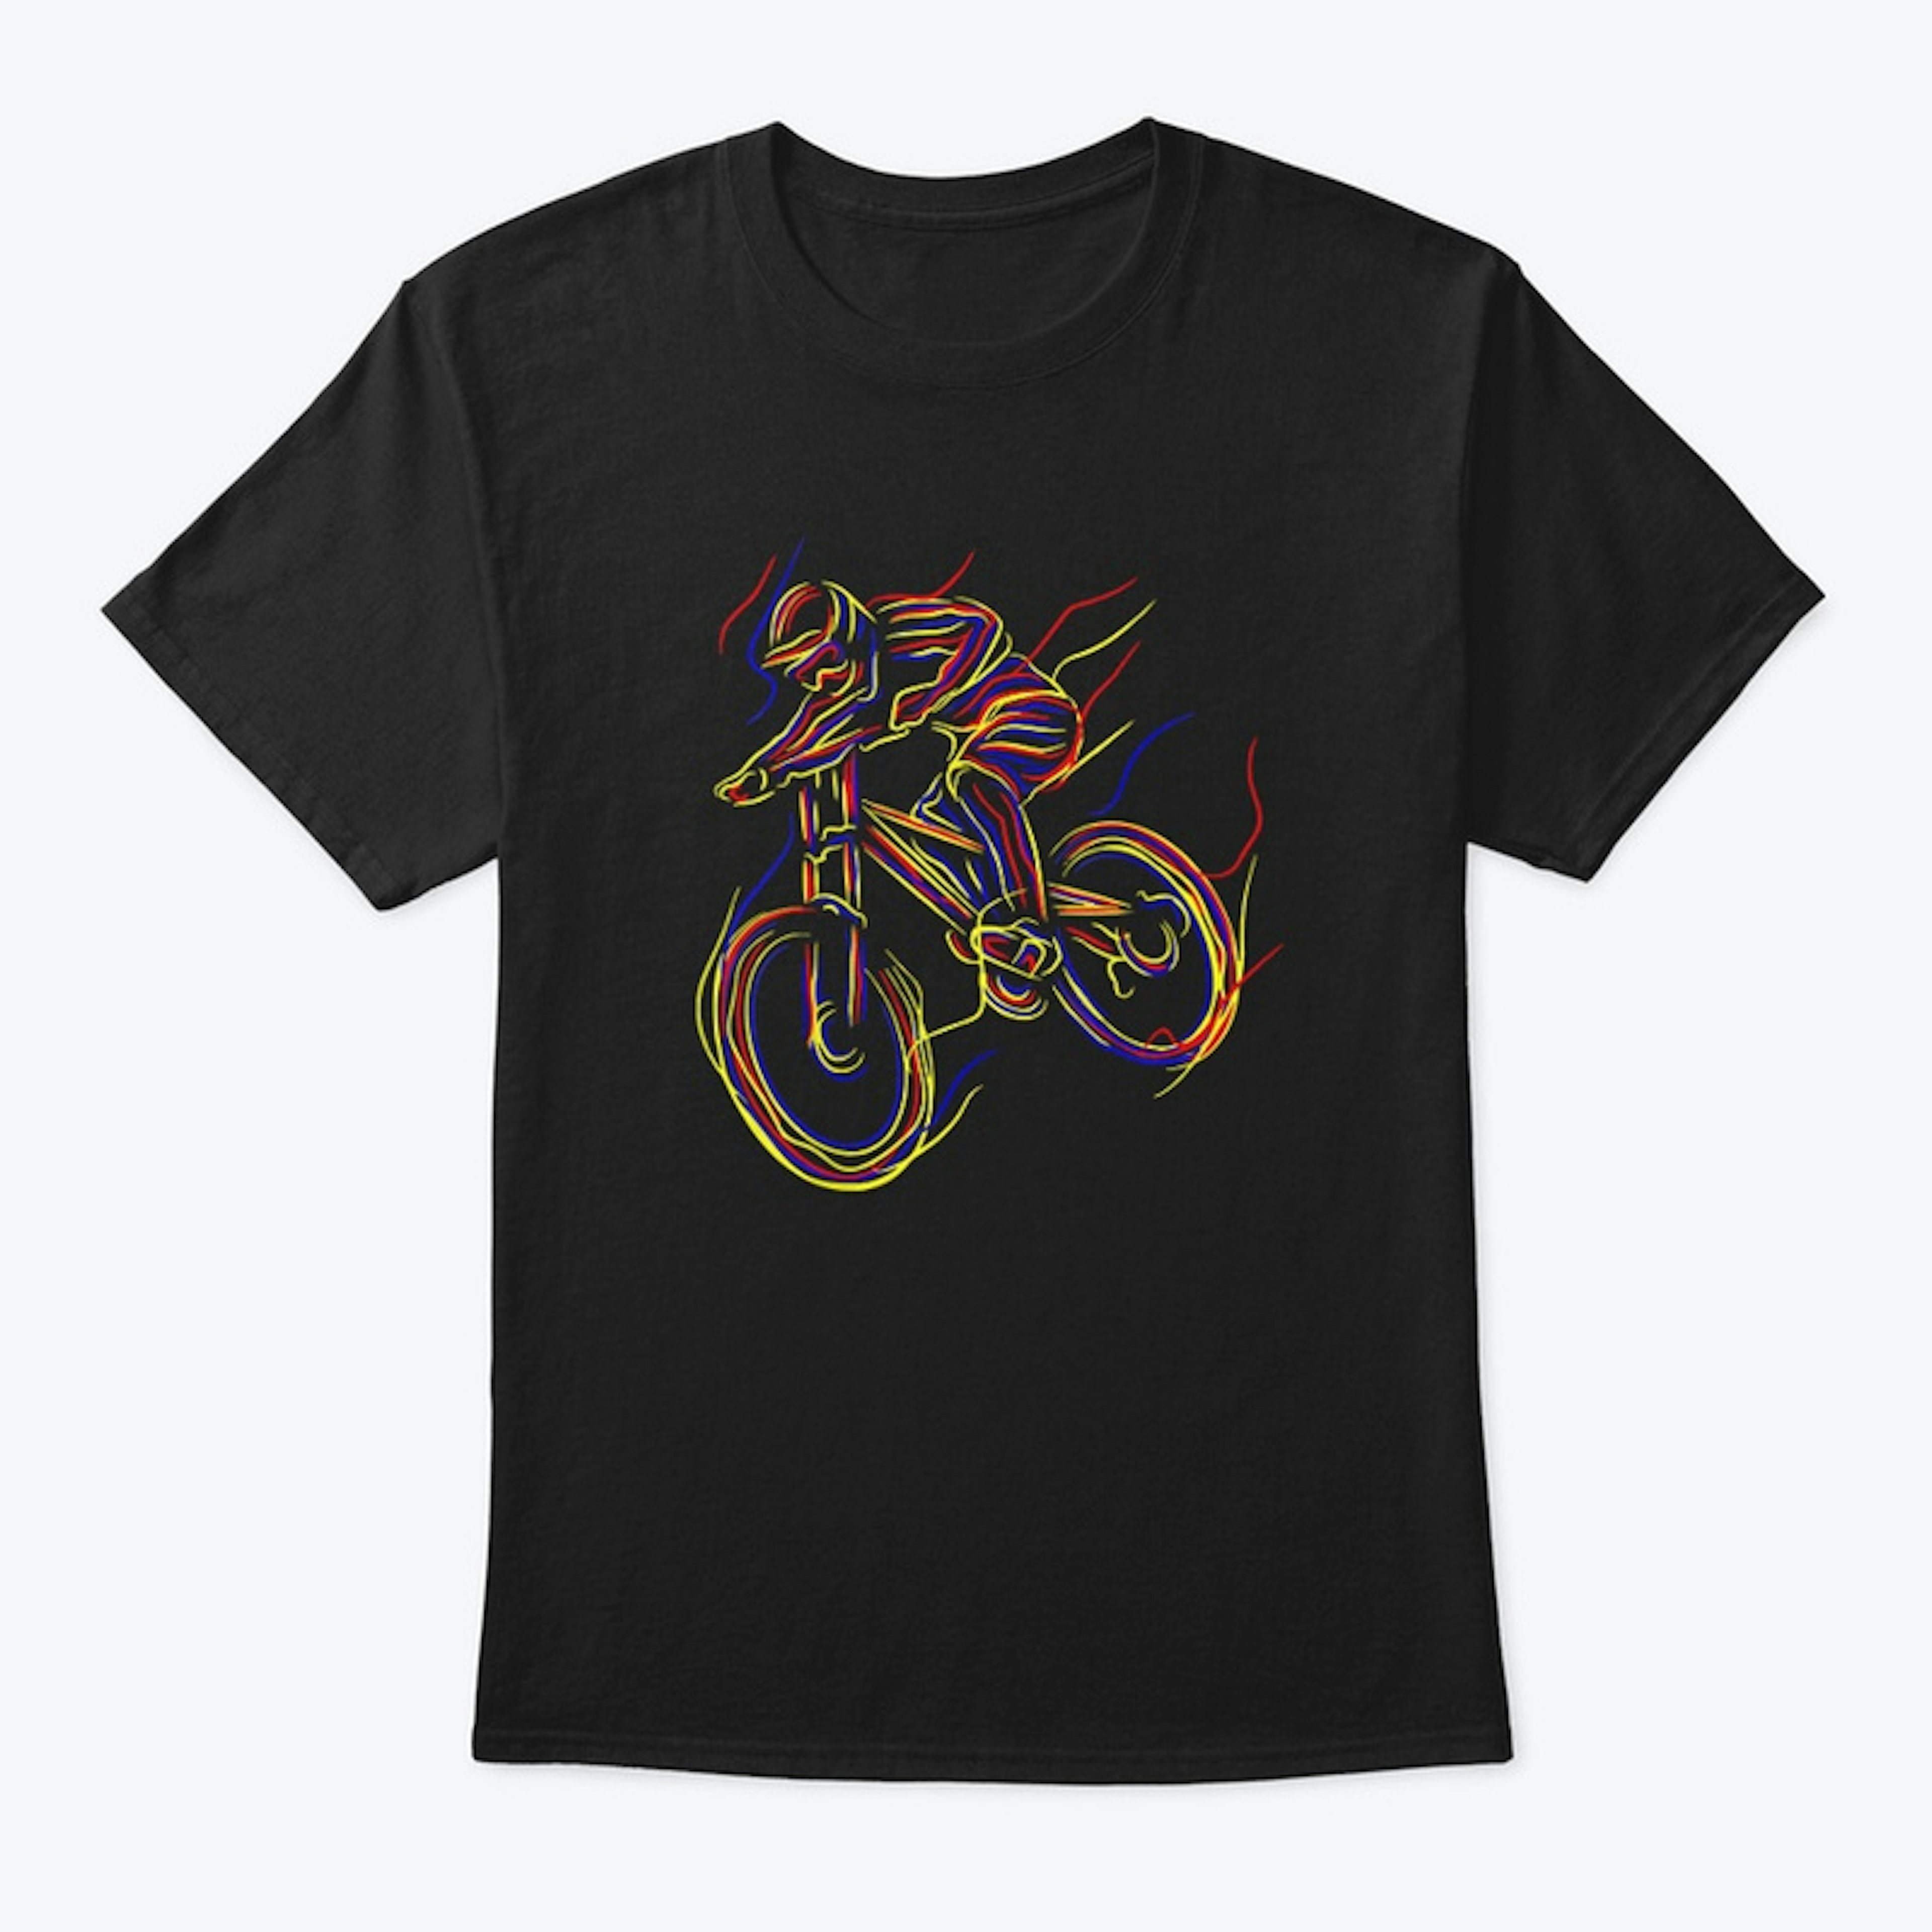 Cycling T-shirt